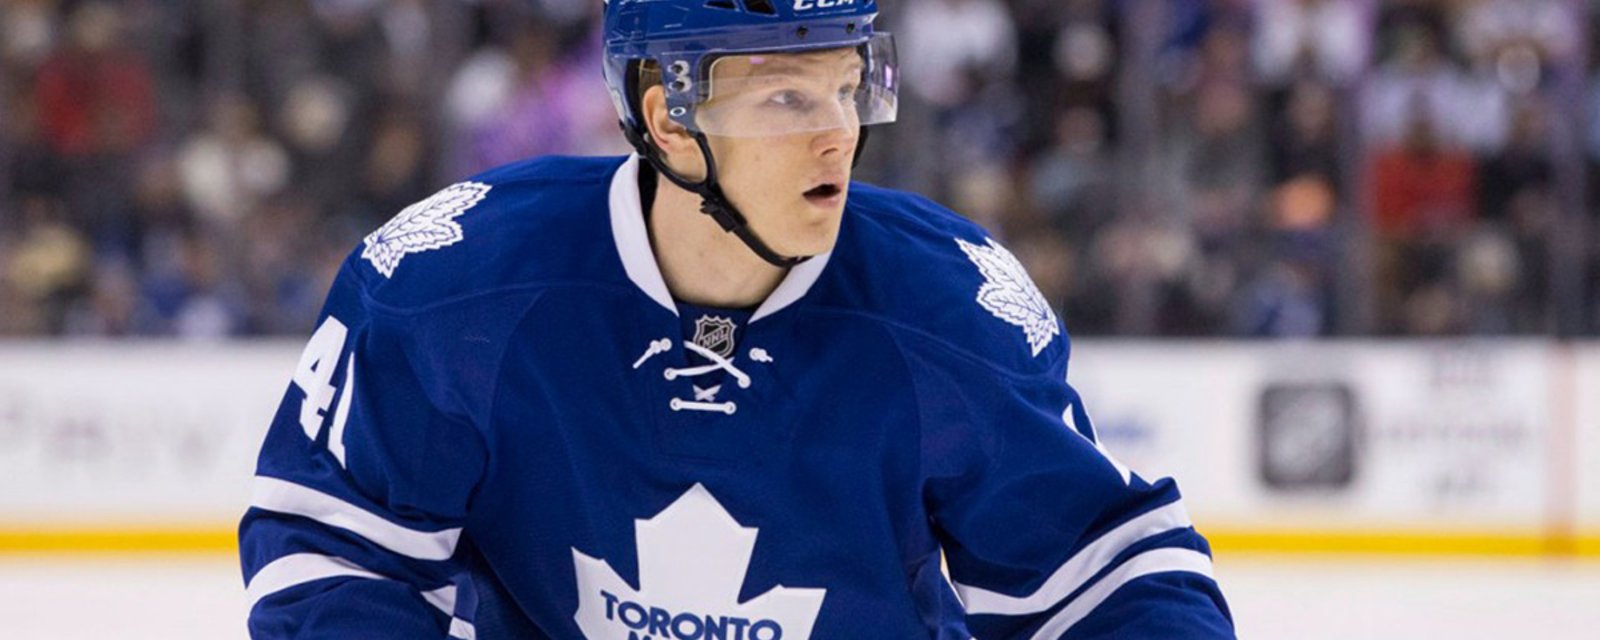 Breaking: Former Leafs forward Soshnikov placed on waivers